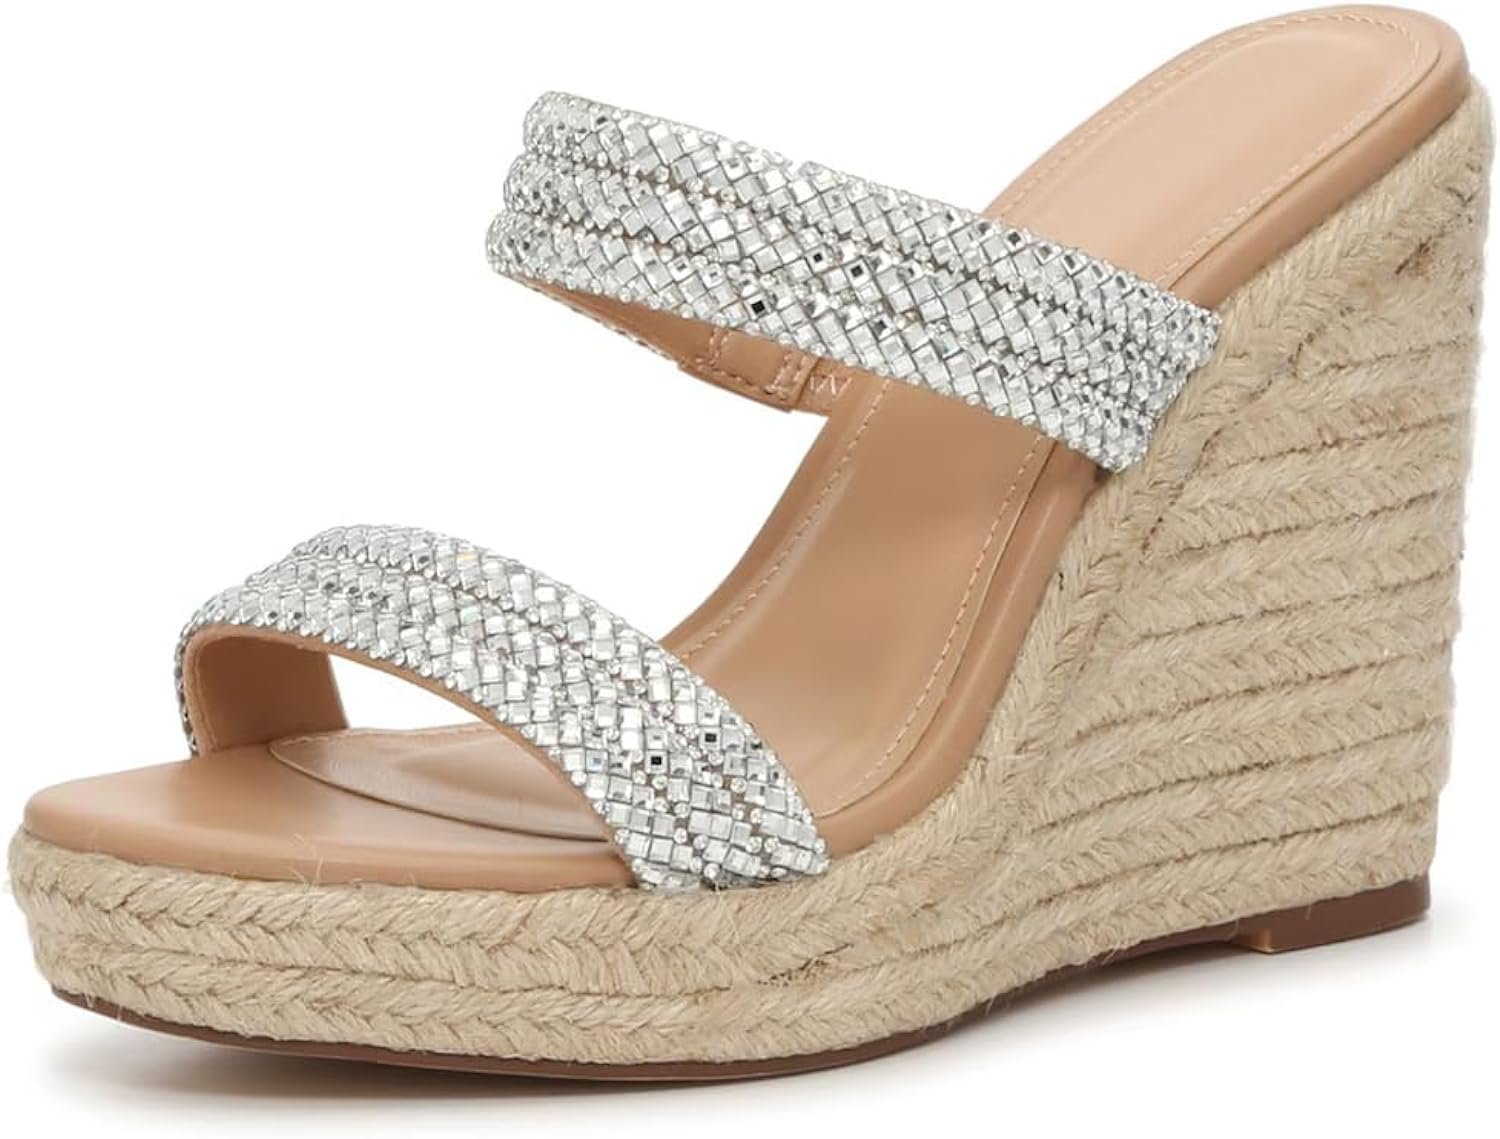 Espadrille Wedge Sandals for Women Rhinestones Dual Strap Open Toe Slip-On Straw Platform Sandals Dressy Summer Shoes